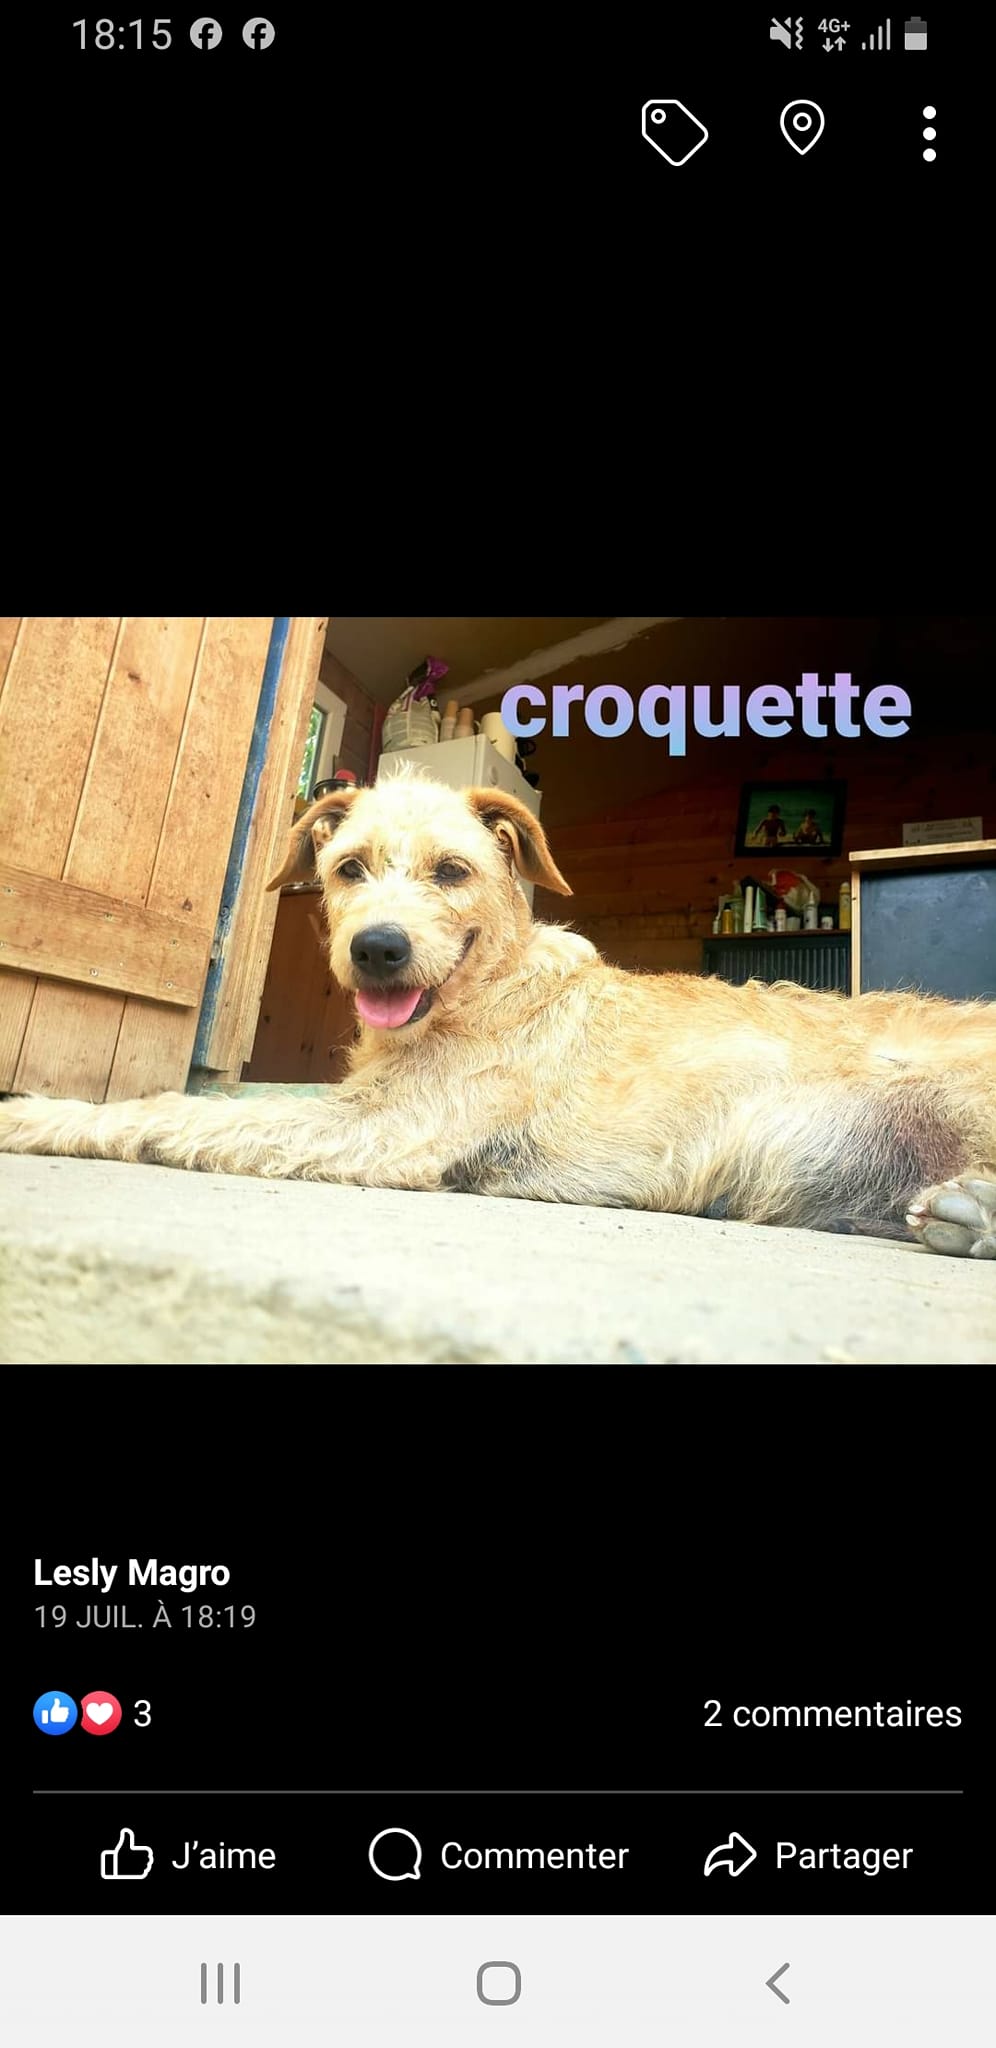 croquette